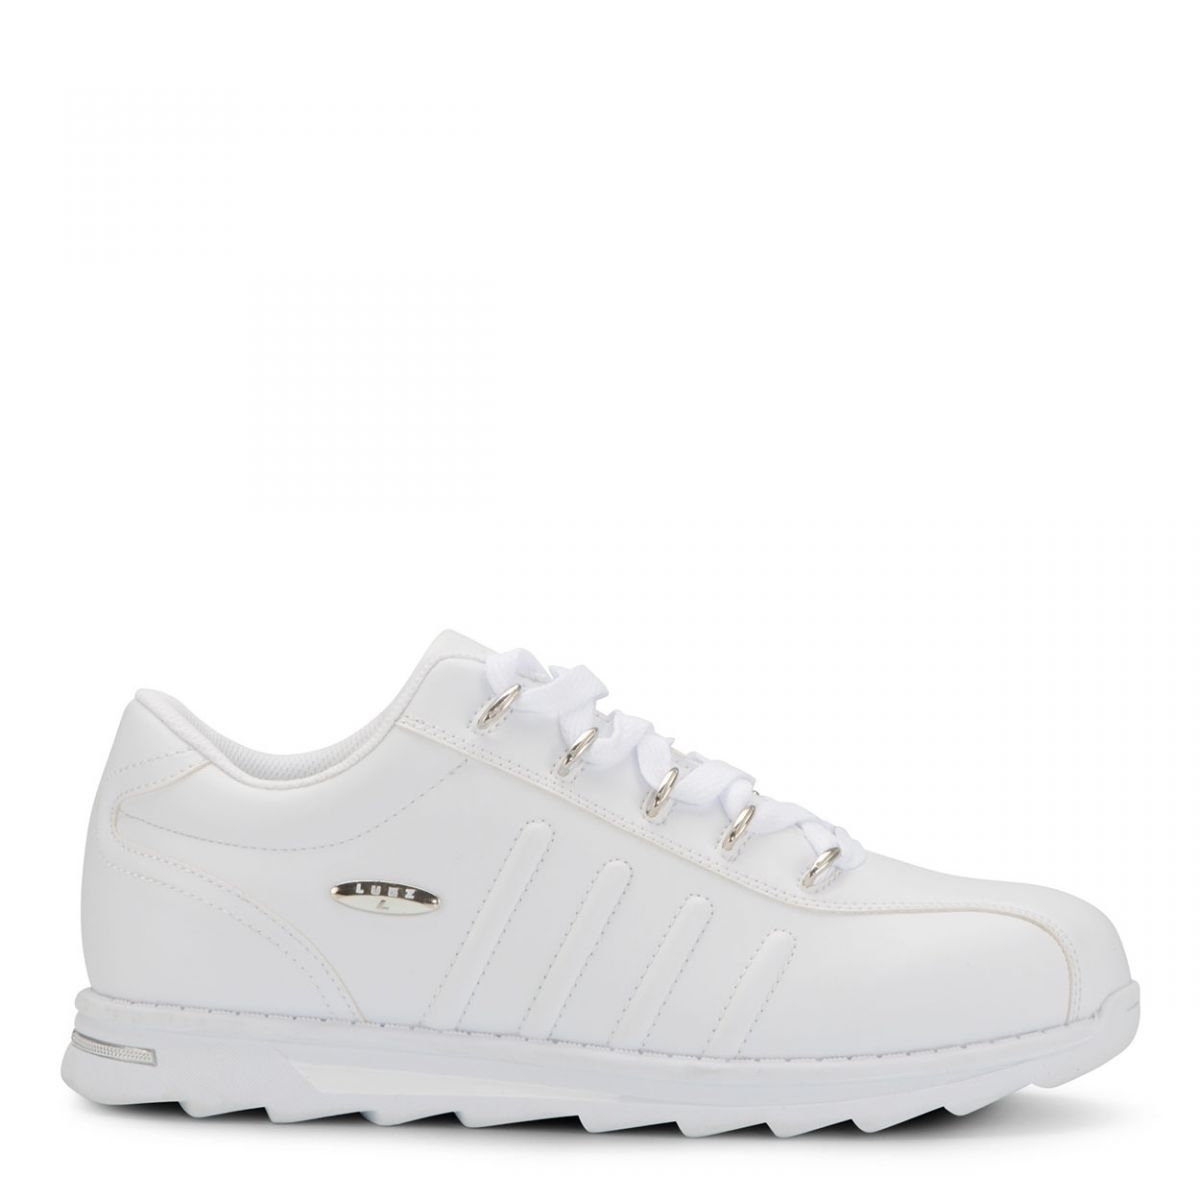 Lugz Men's Changeover II Sneaker White - MCHGIIV-100 WHITE - WHITE, 7.5